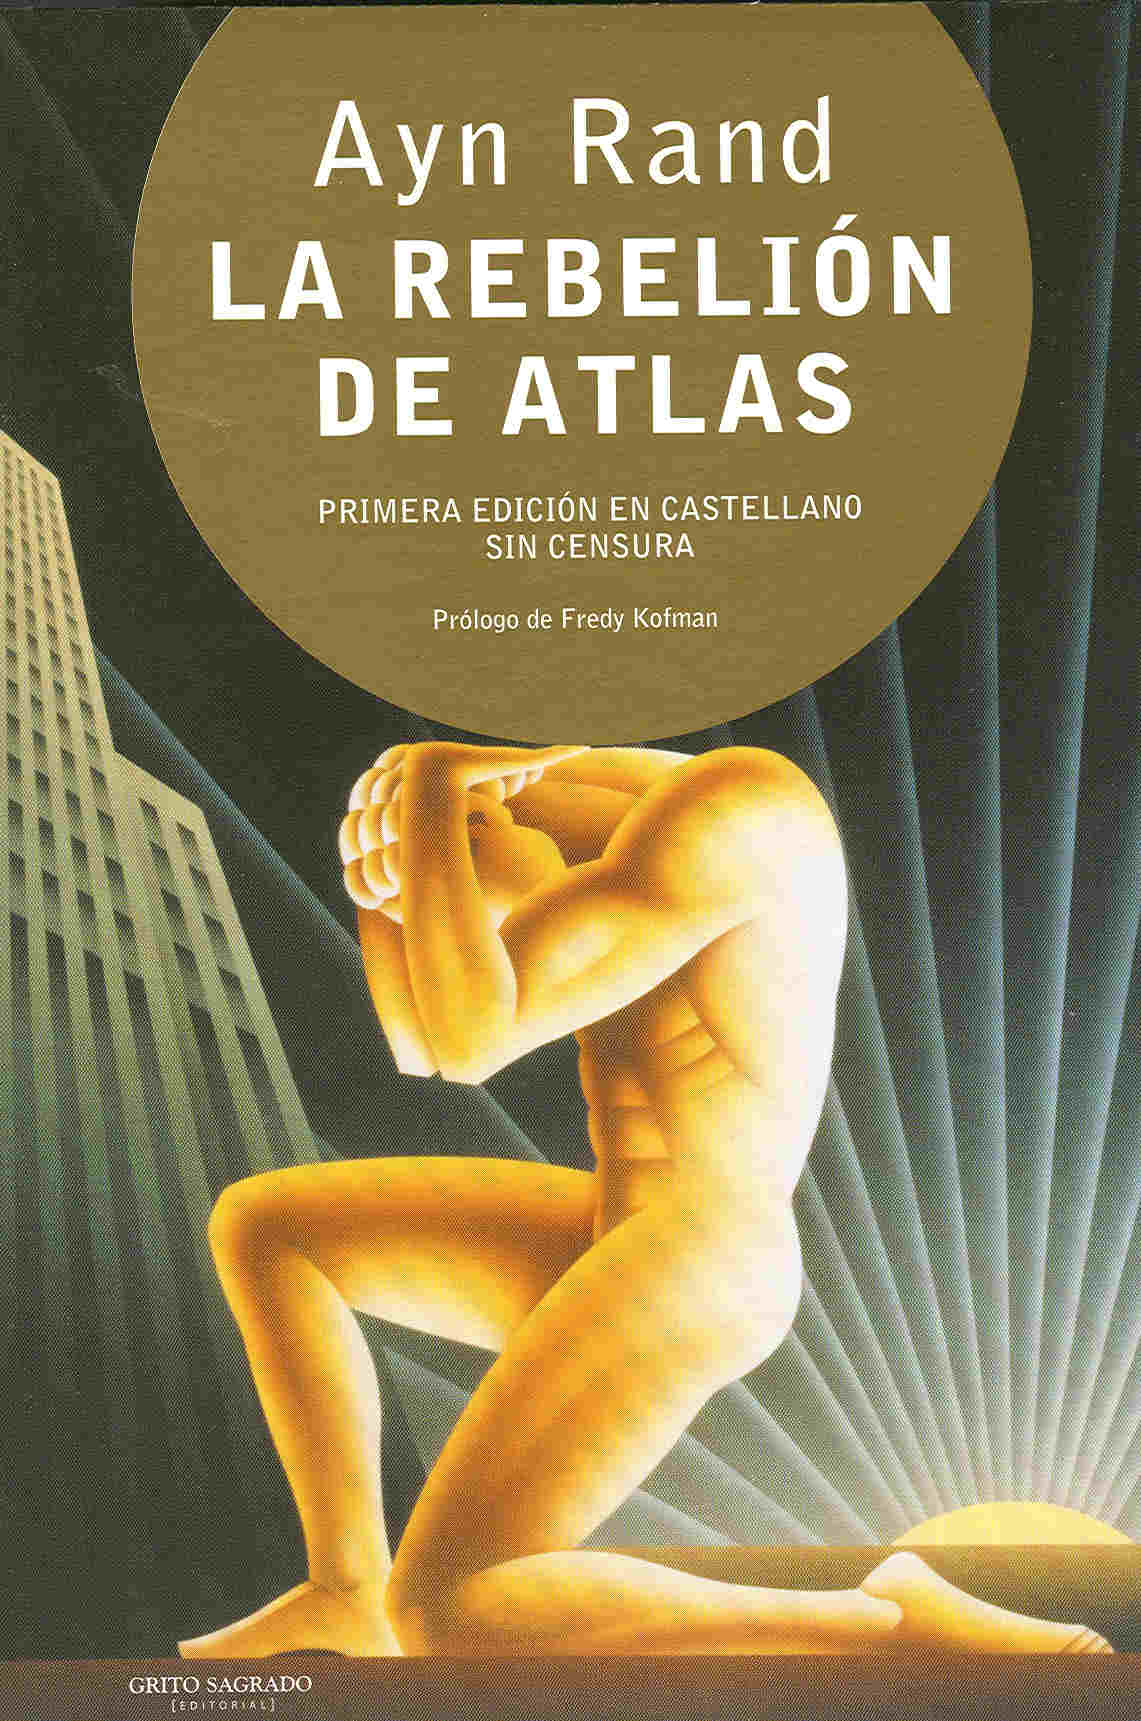 http://www.libros-mas-vendidos.com/wp-content/uploads/2012/02/libro-la-rebelion-de-atlas-ayn-rand.jpg